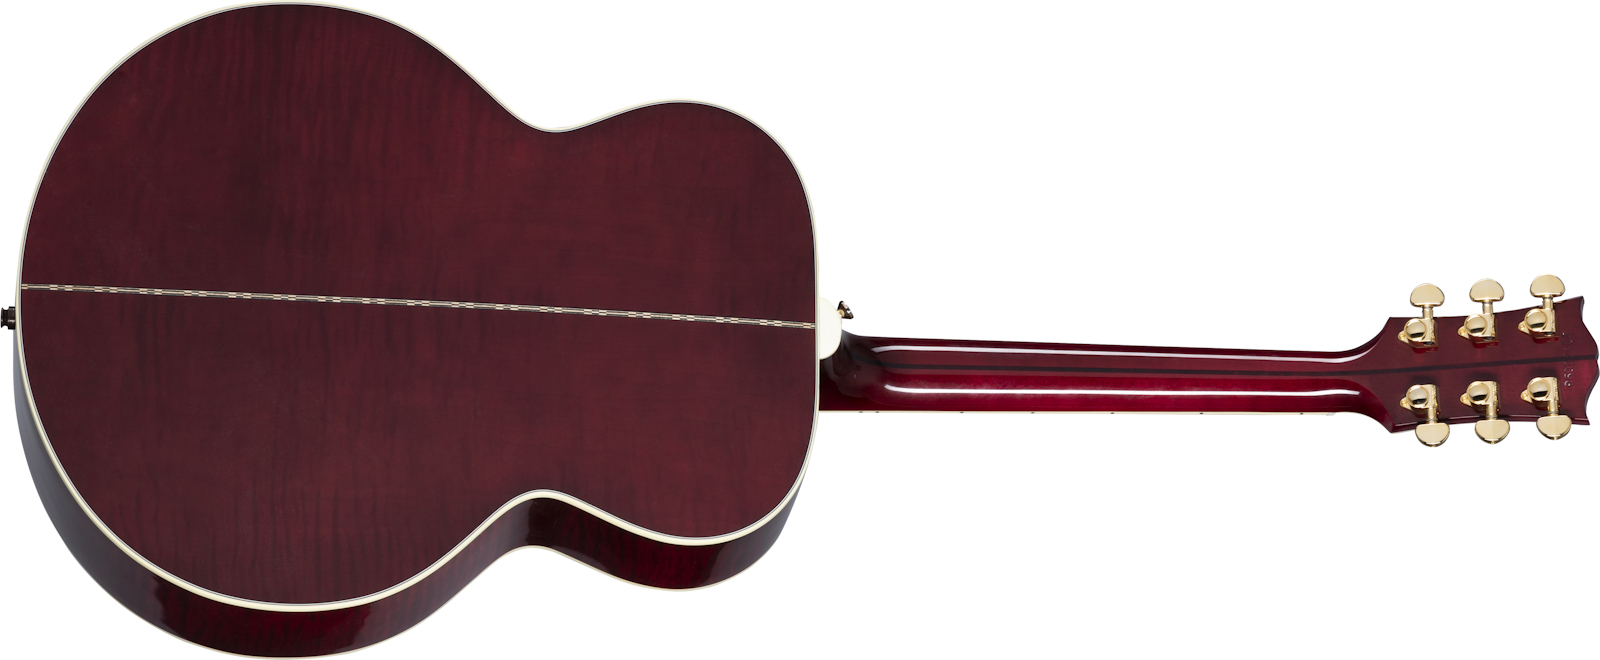 Gibson Sj-200 Standard Modern 2021 Super Jumbo Epicea Erable Rw - Wine Red - Guitare Electro Acoustique - Variation 1